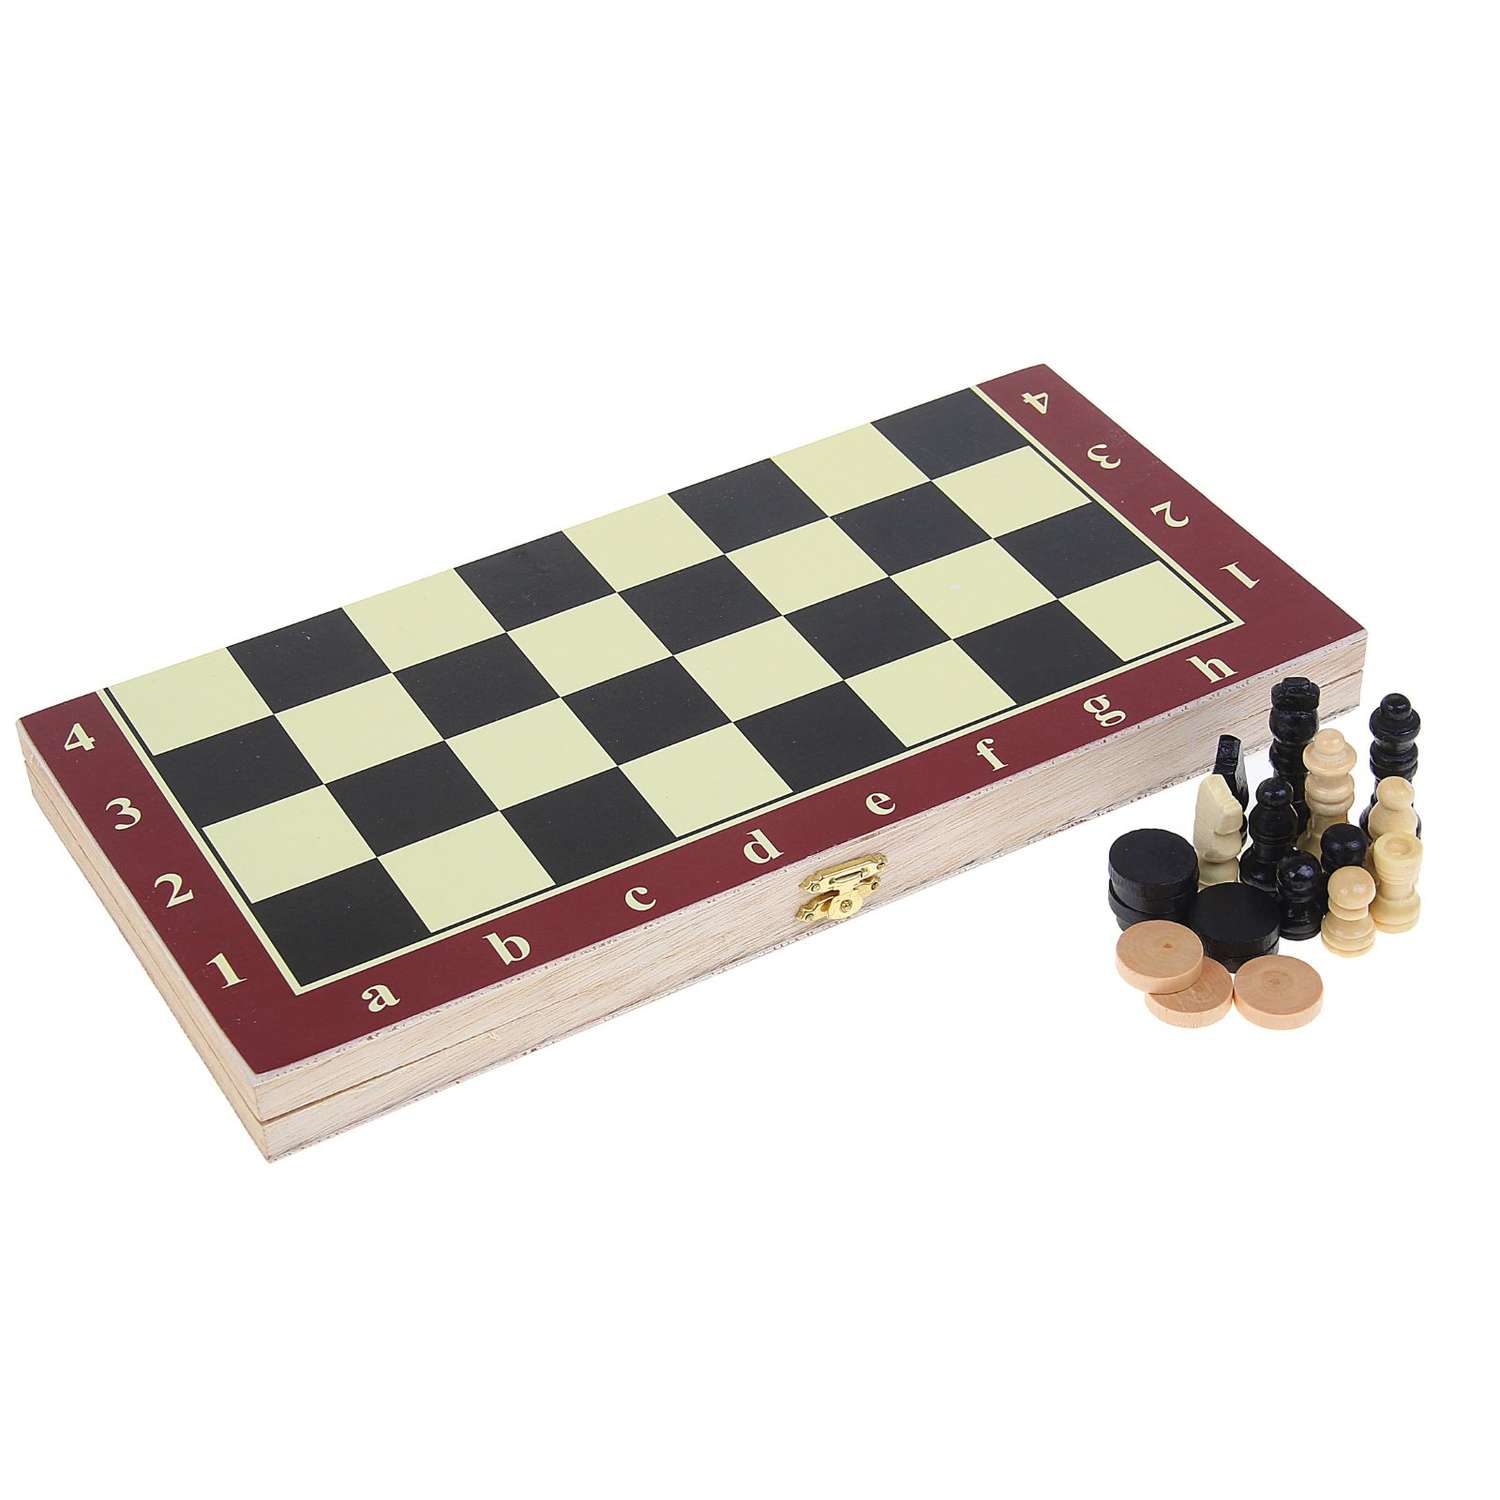 Настольная игра Sima-Land 3 в 1 Карнал нарды шахматы шашки фишки дер фигуры пластик 29х29 см - фото 5